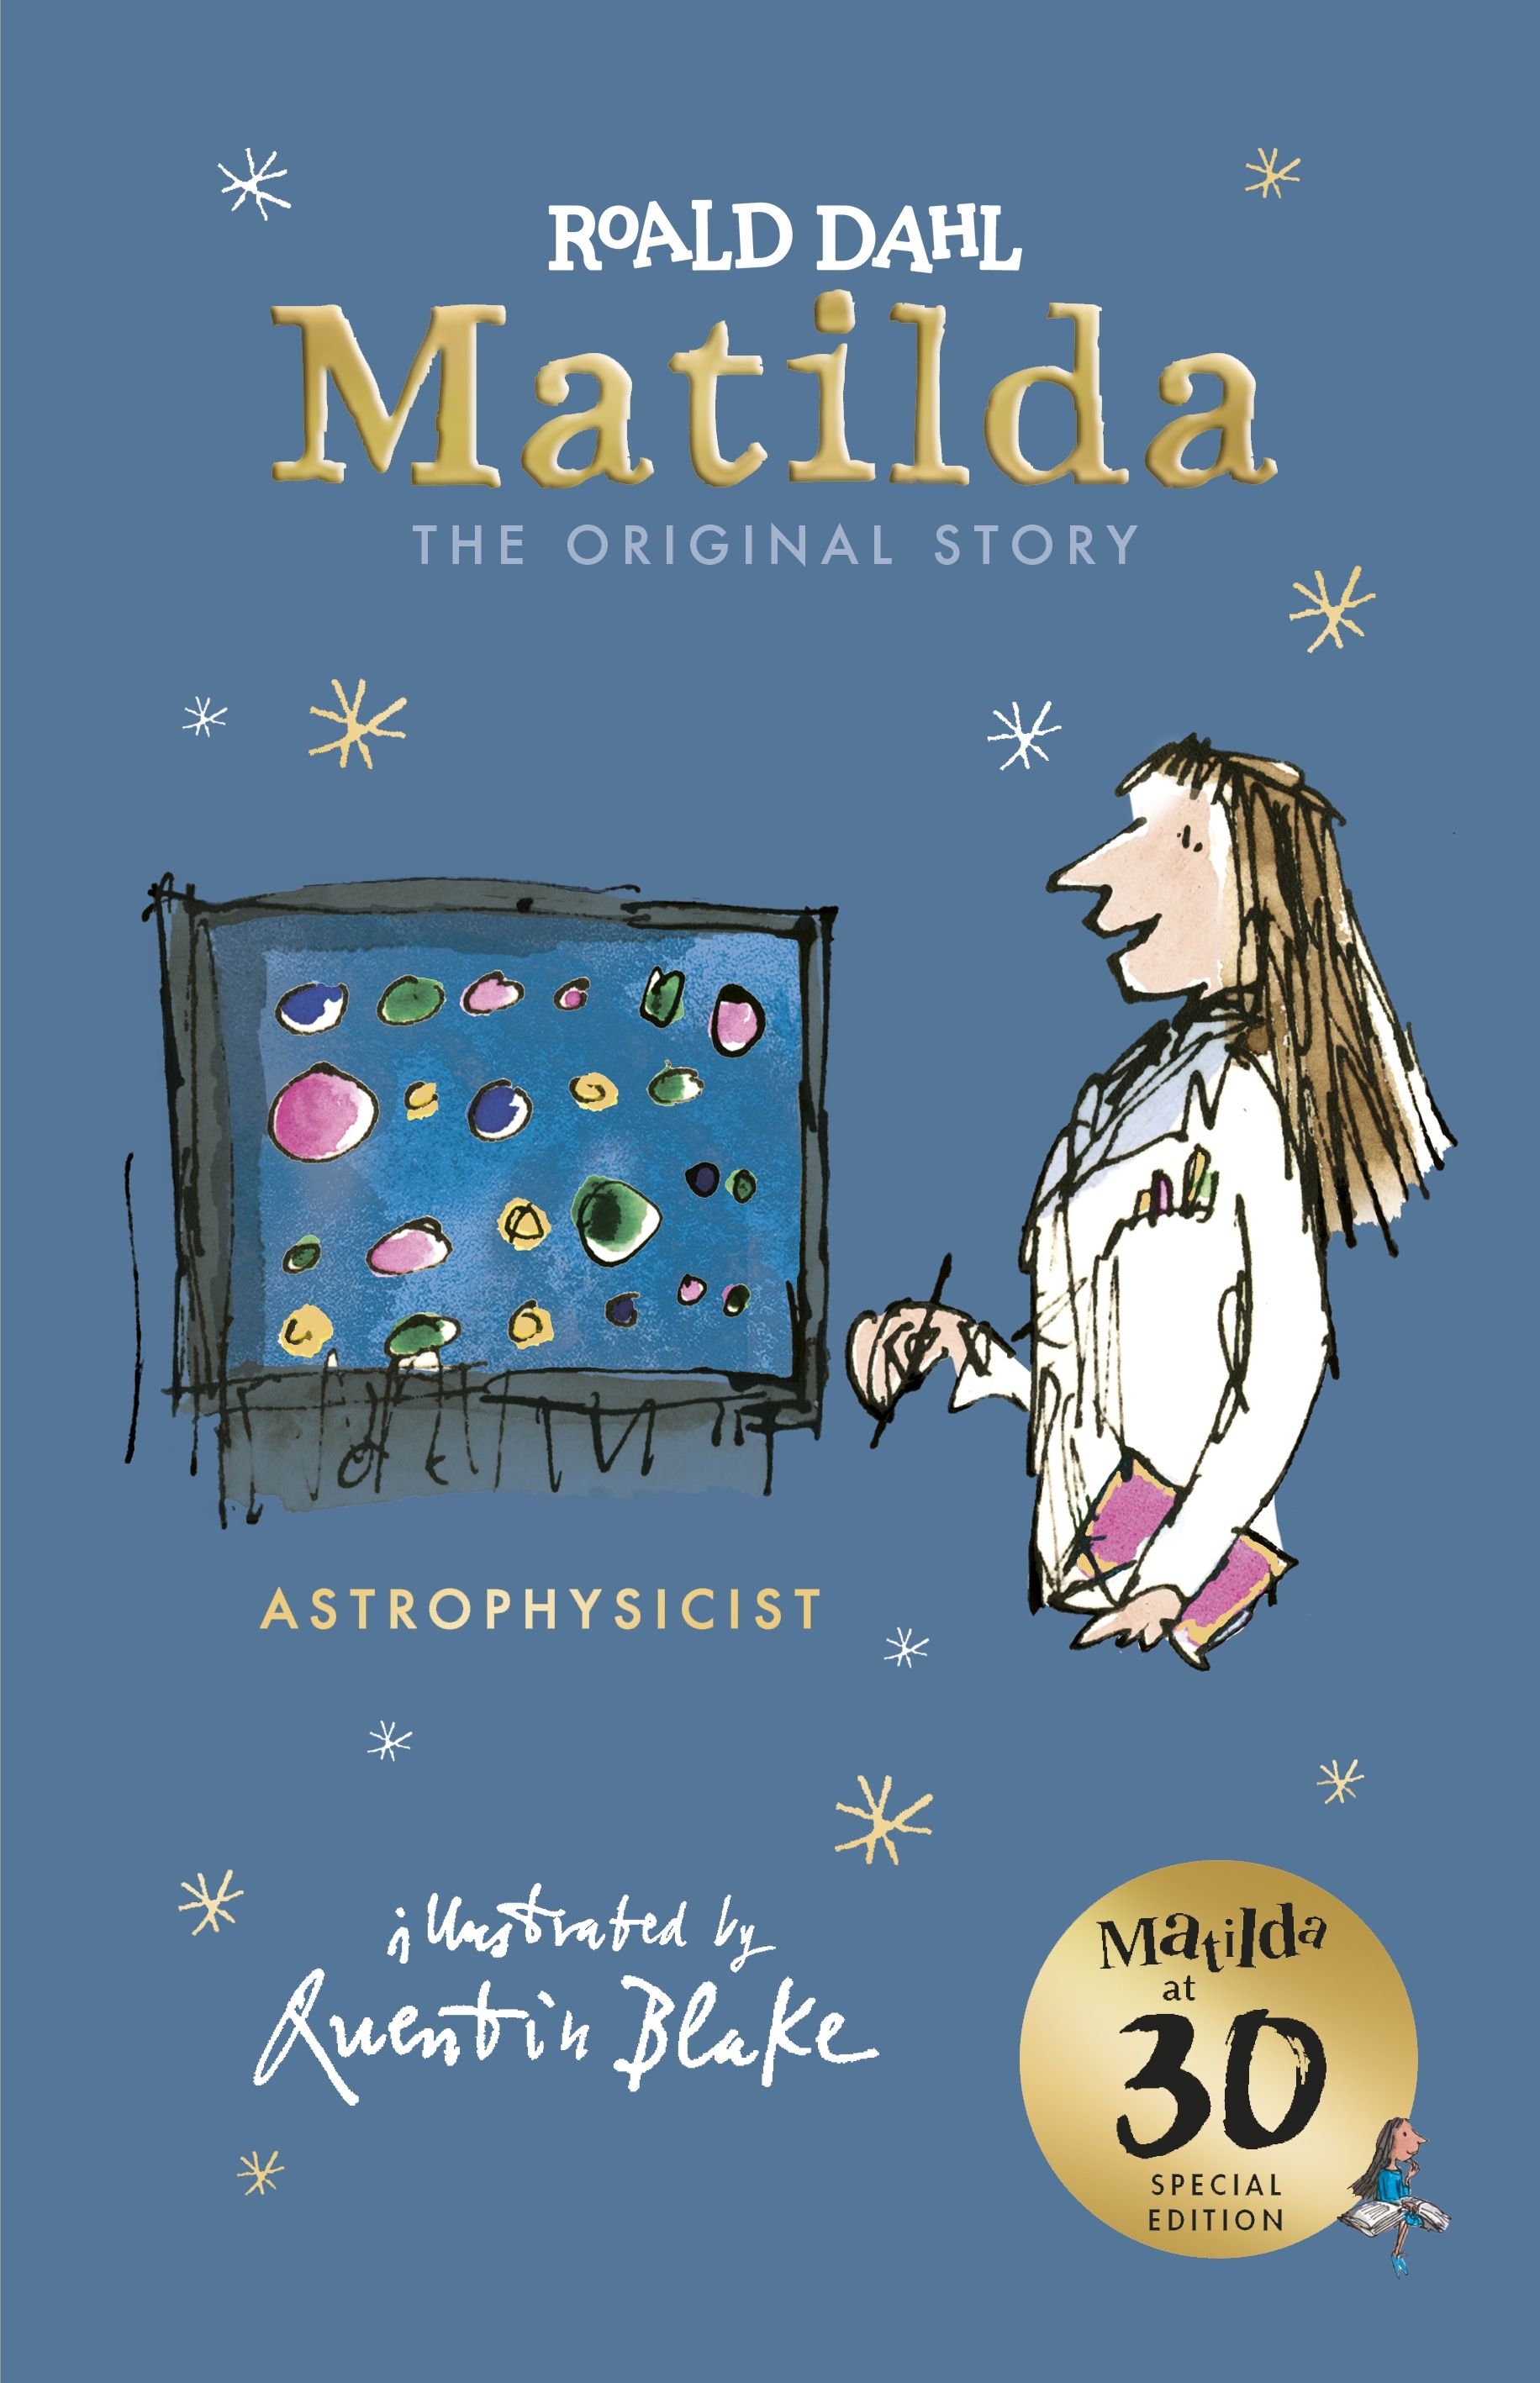 Book “Matilda at 30: Astrophysicist” by Roald Dahl, Quentin Blake — September 5, 2019